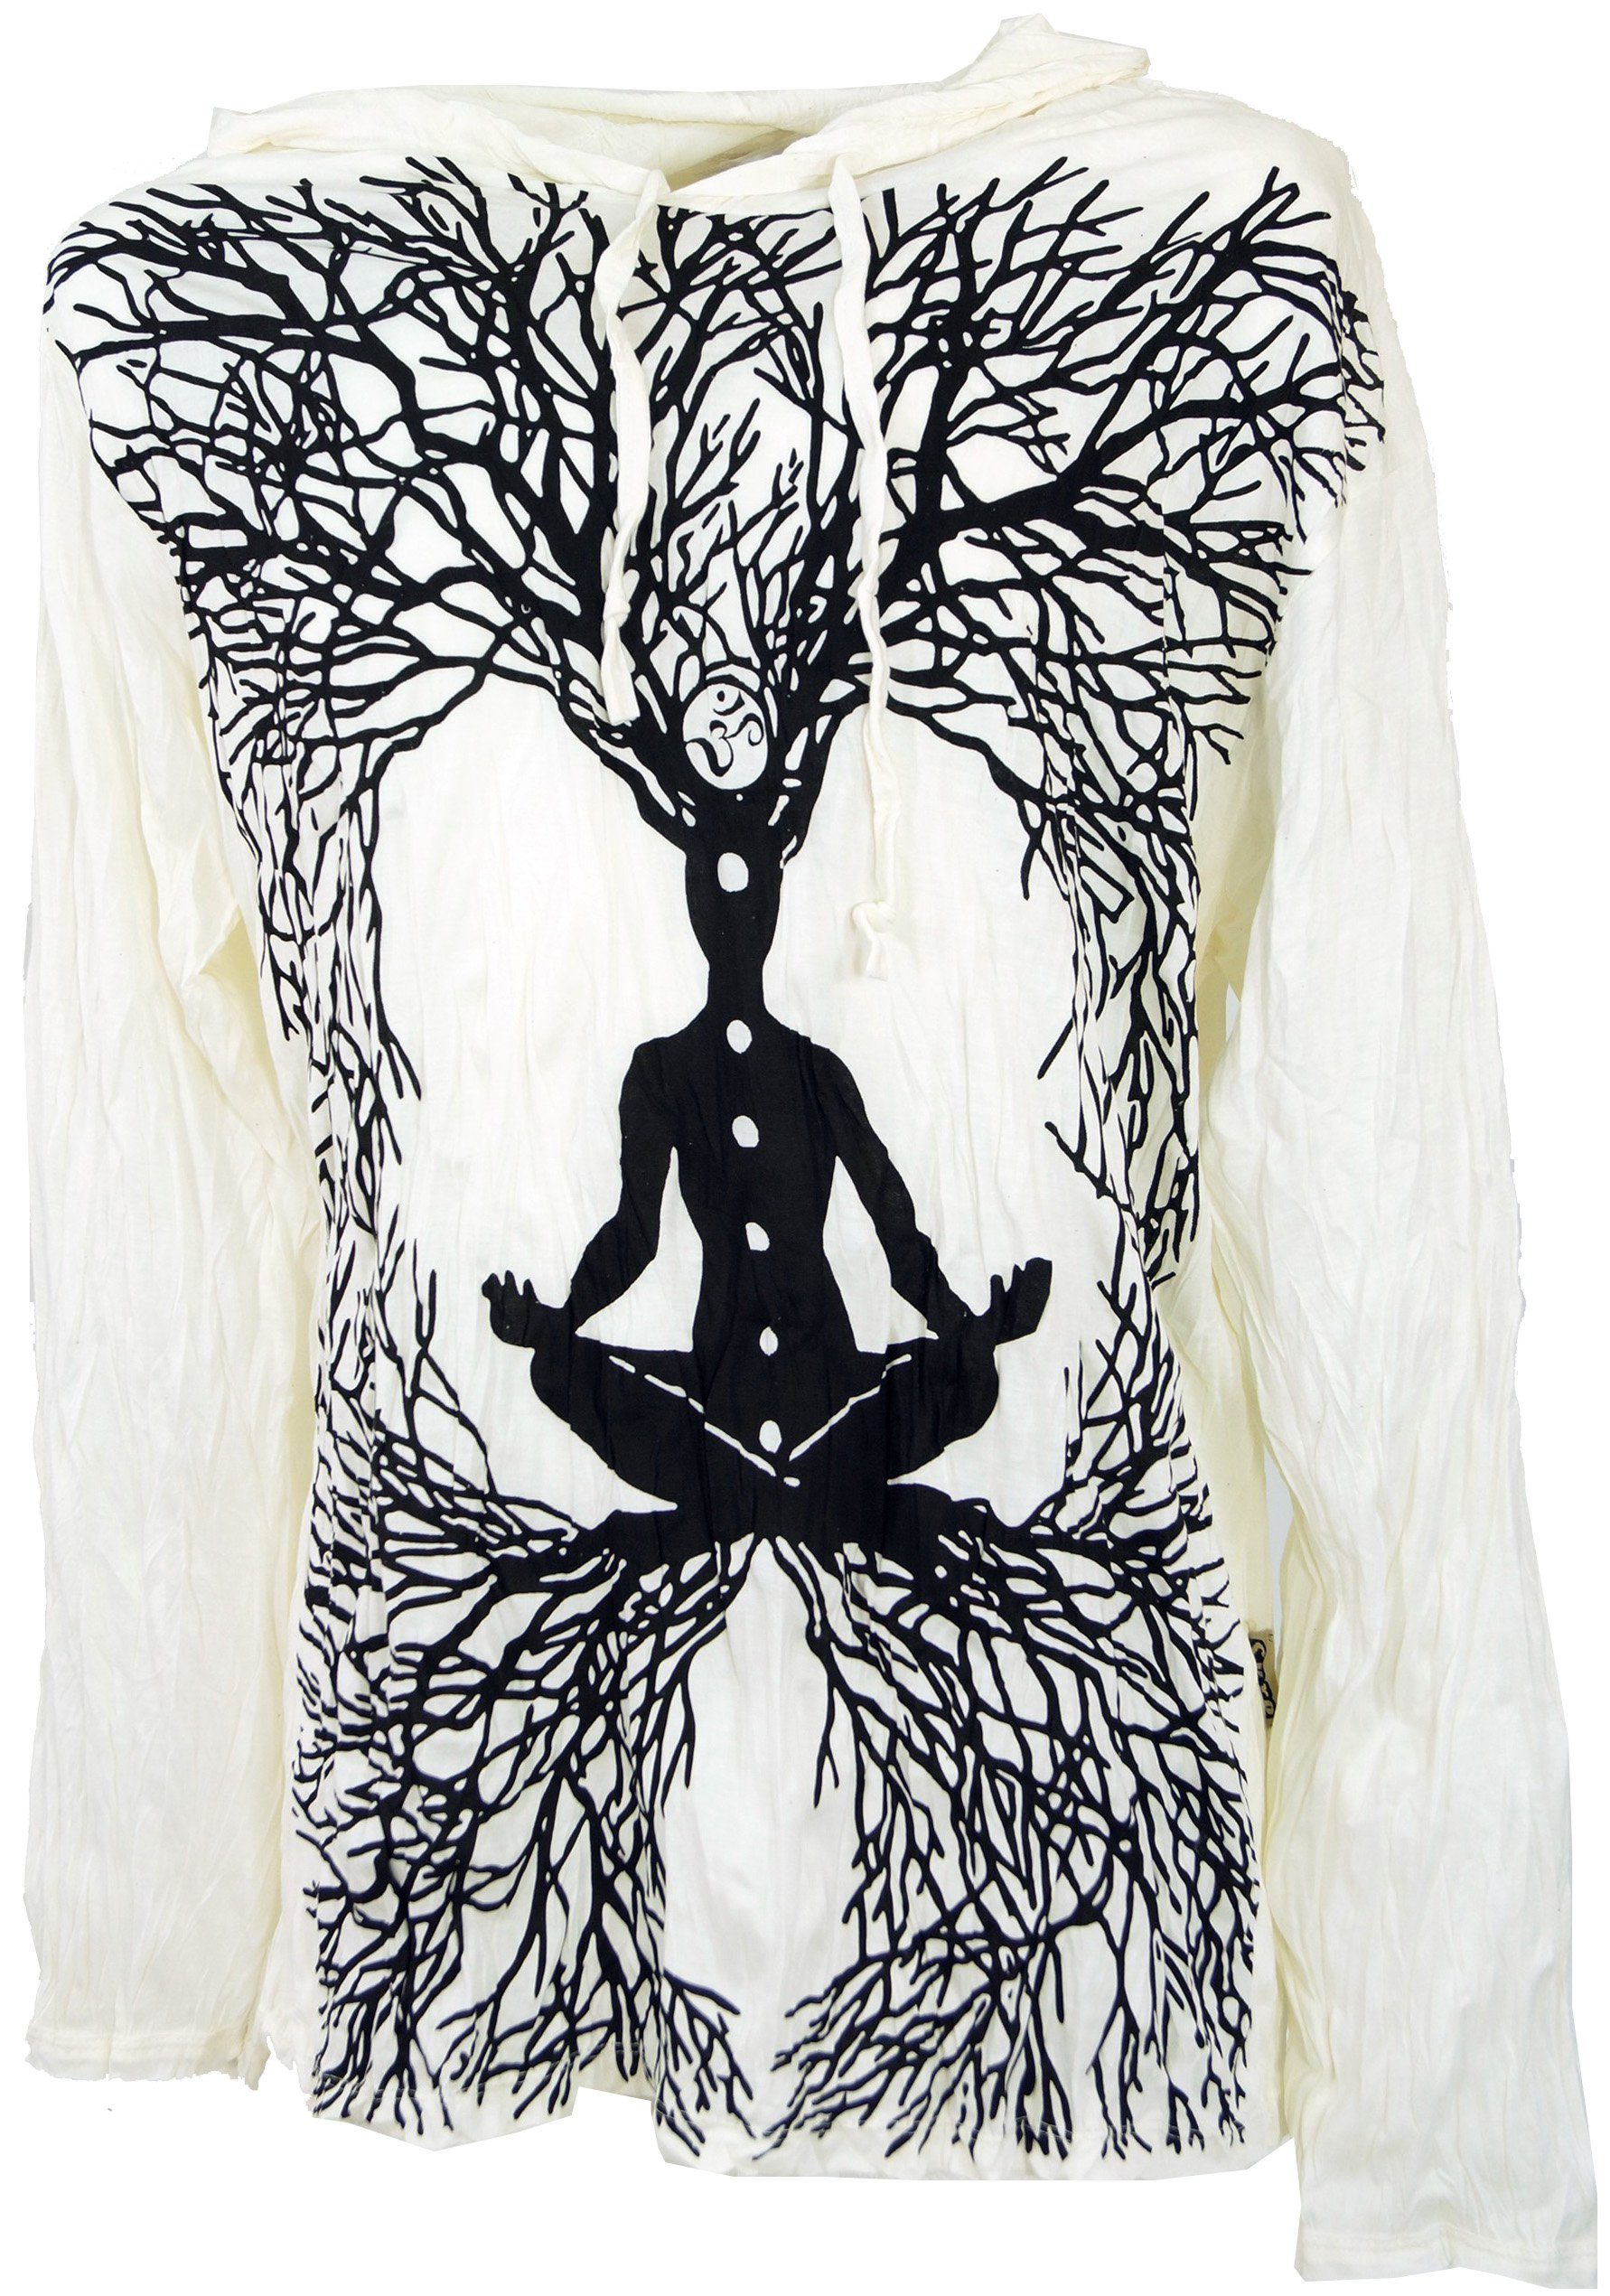 Bekleidung Sure Kapuzenshirt Langarmshirt, Meditation.. alternative Guru-Shop Style, T-Shirt weiß Goa Festival,